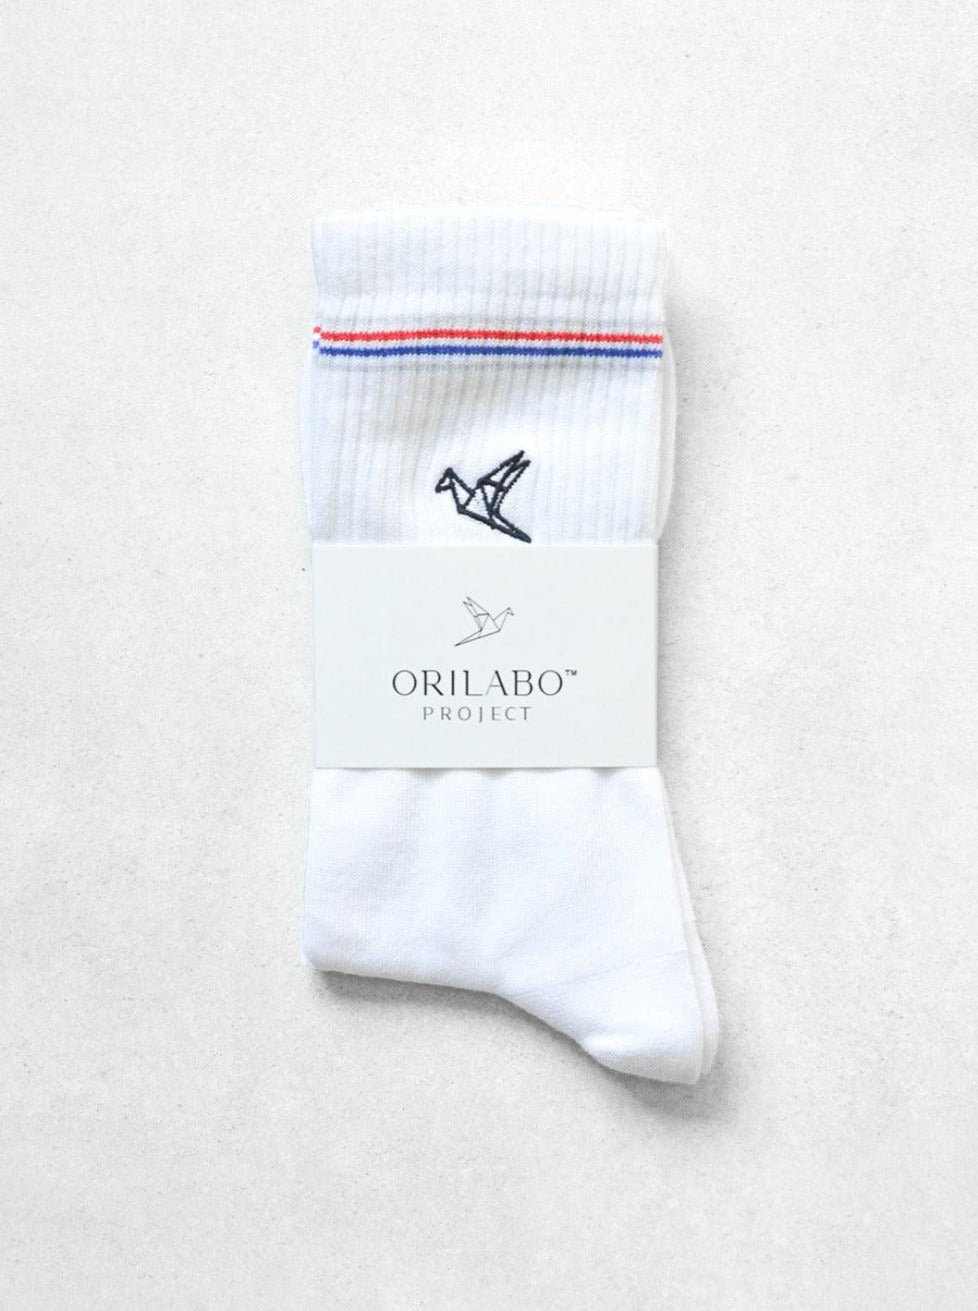 ORILABO Organic Cotton Socks - White - 1 Pair - ORILABO Project